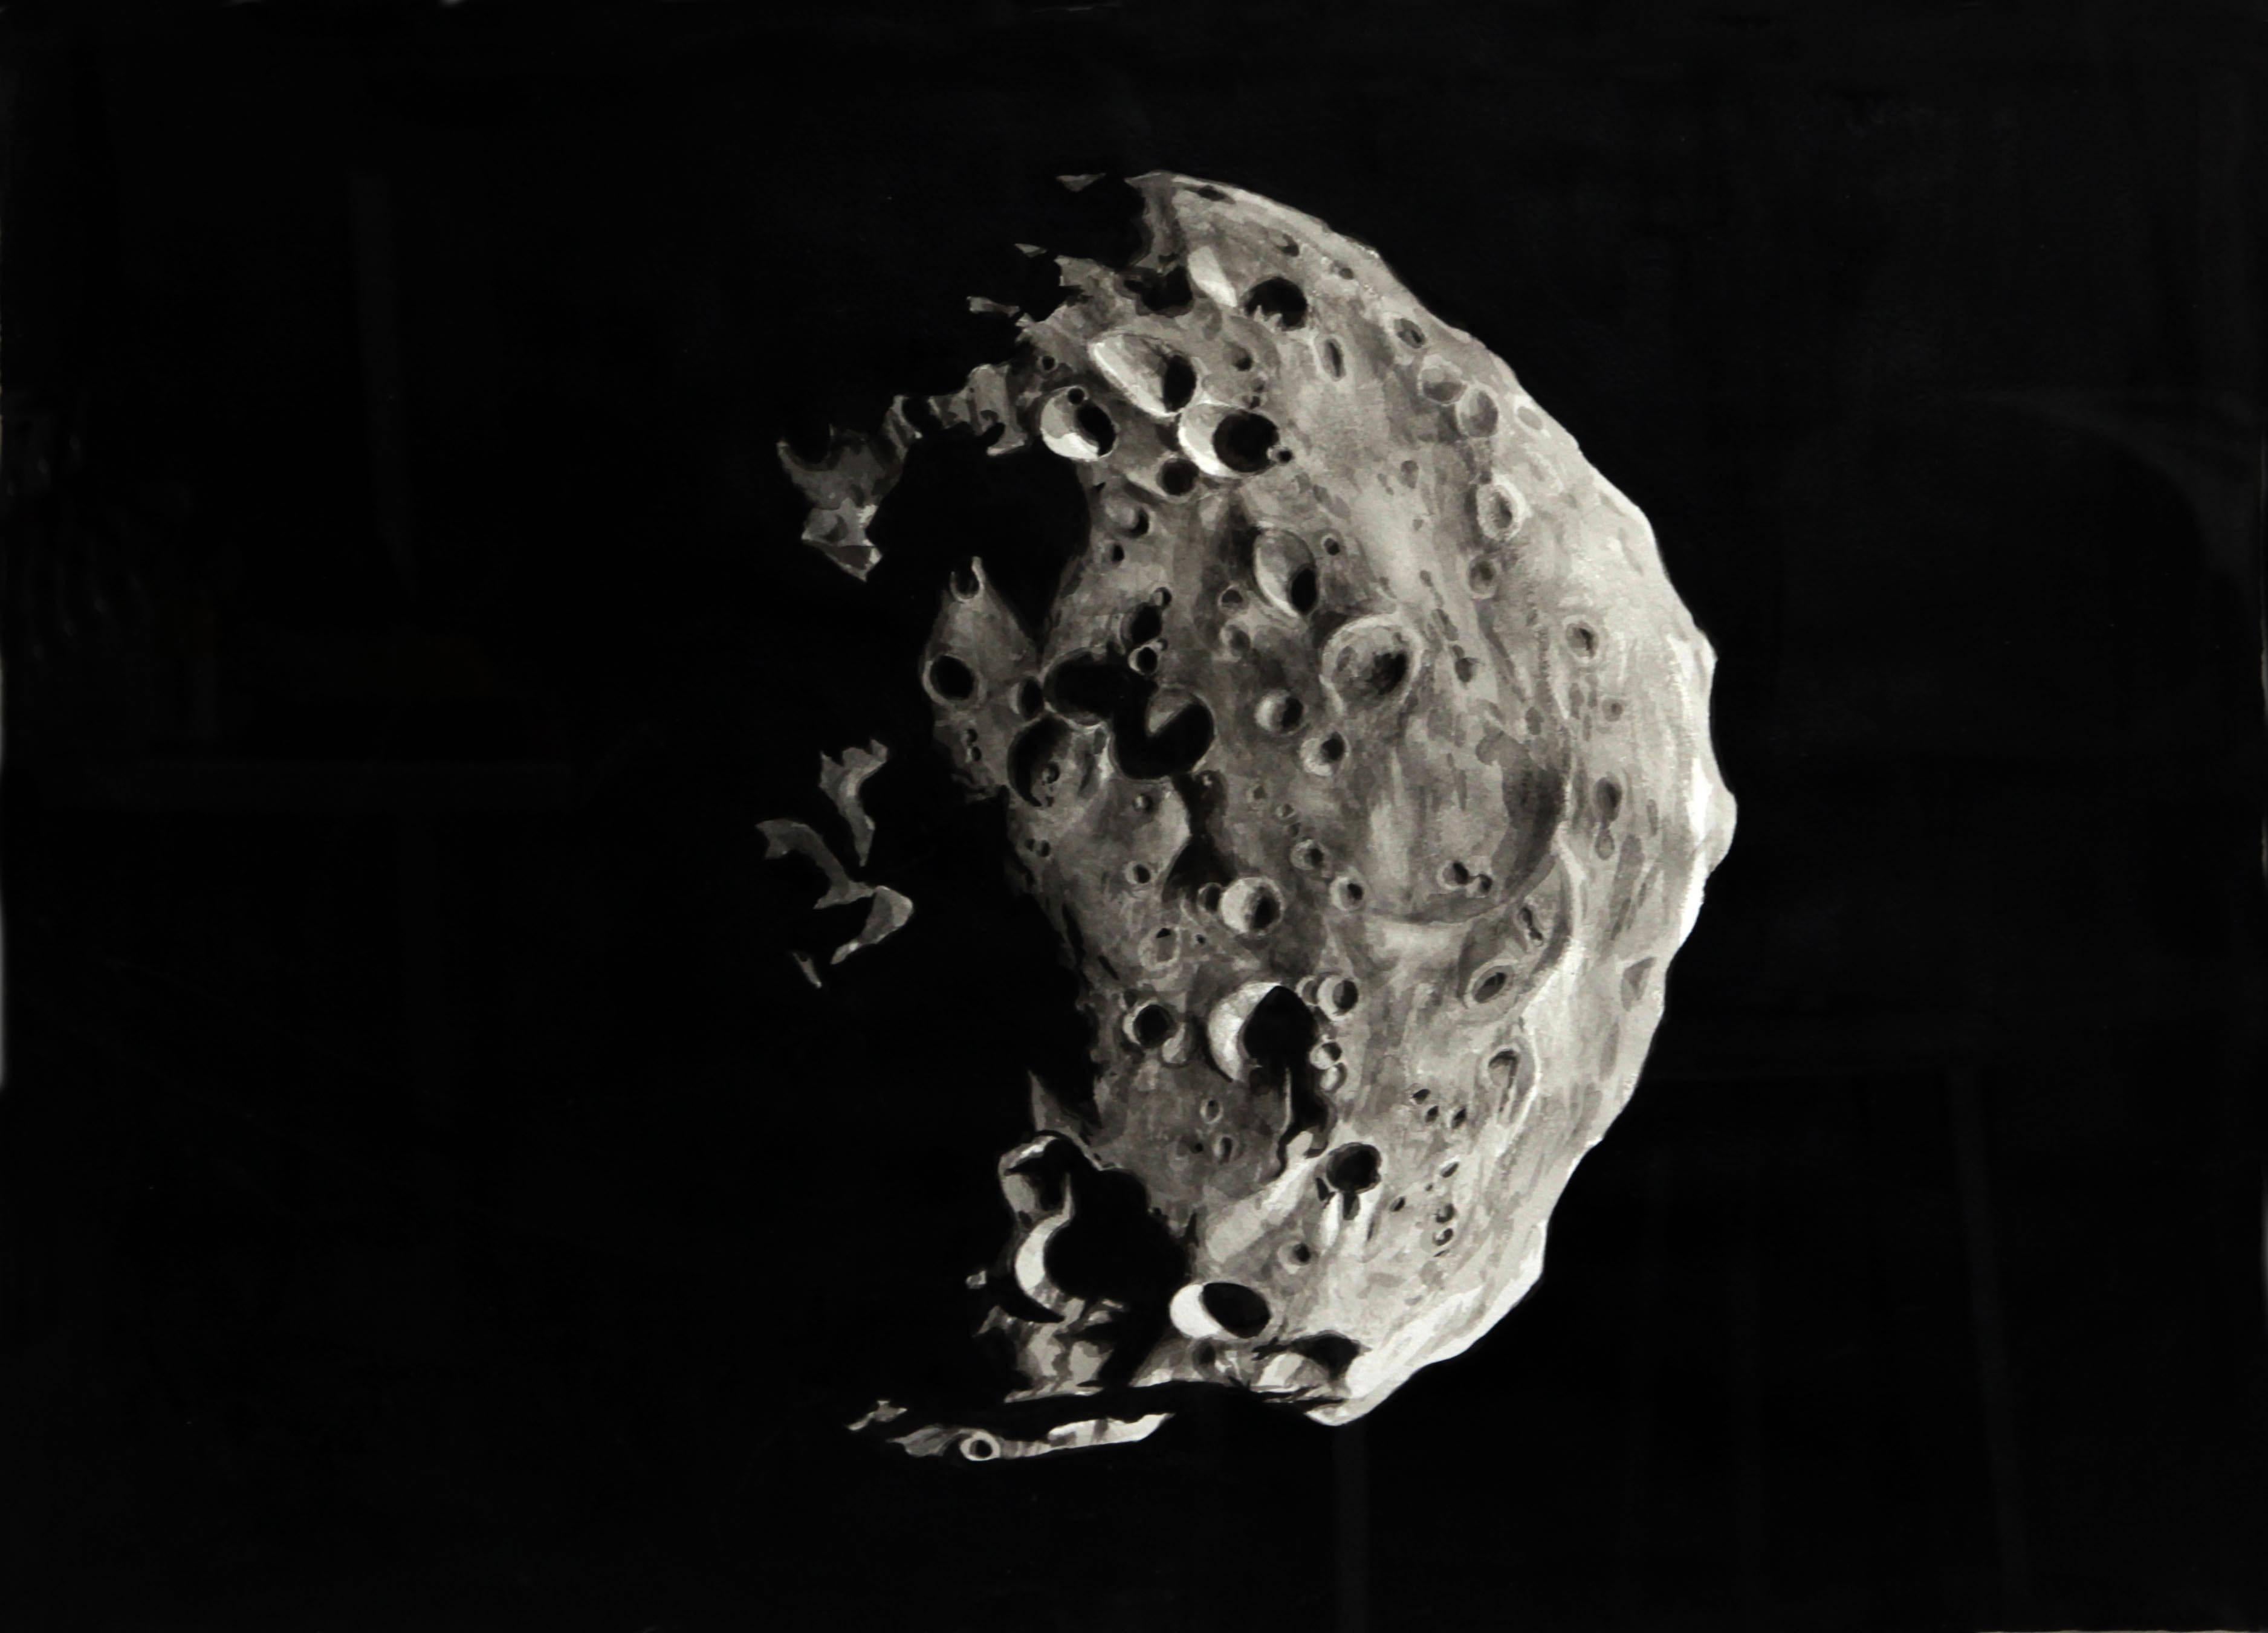 Asteroid 5